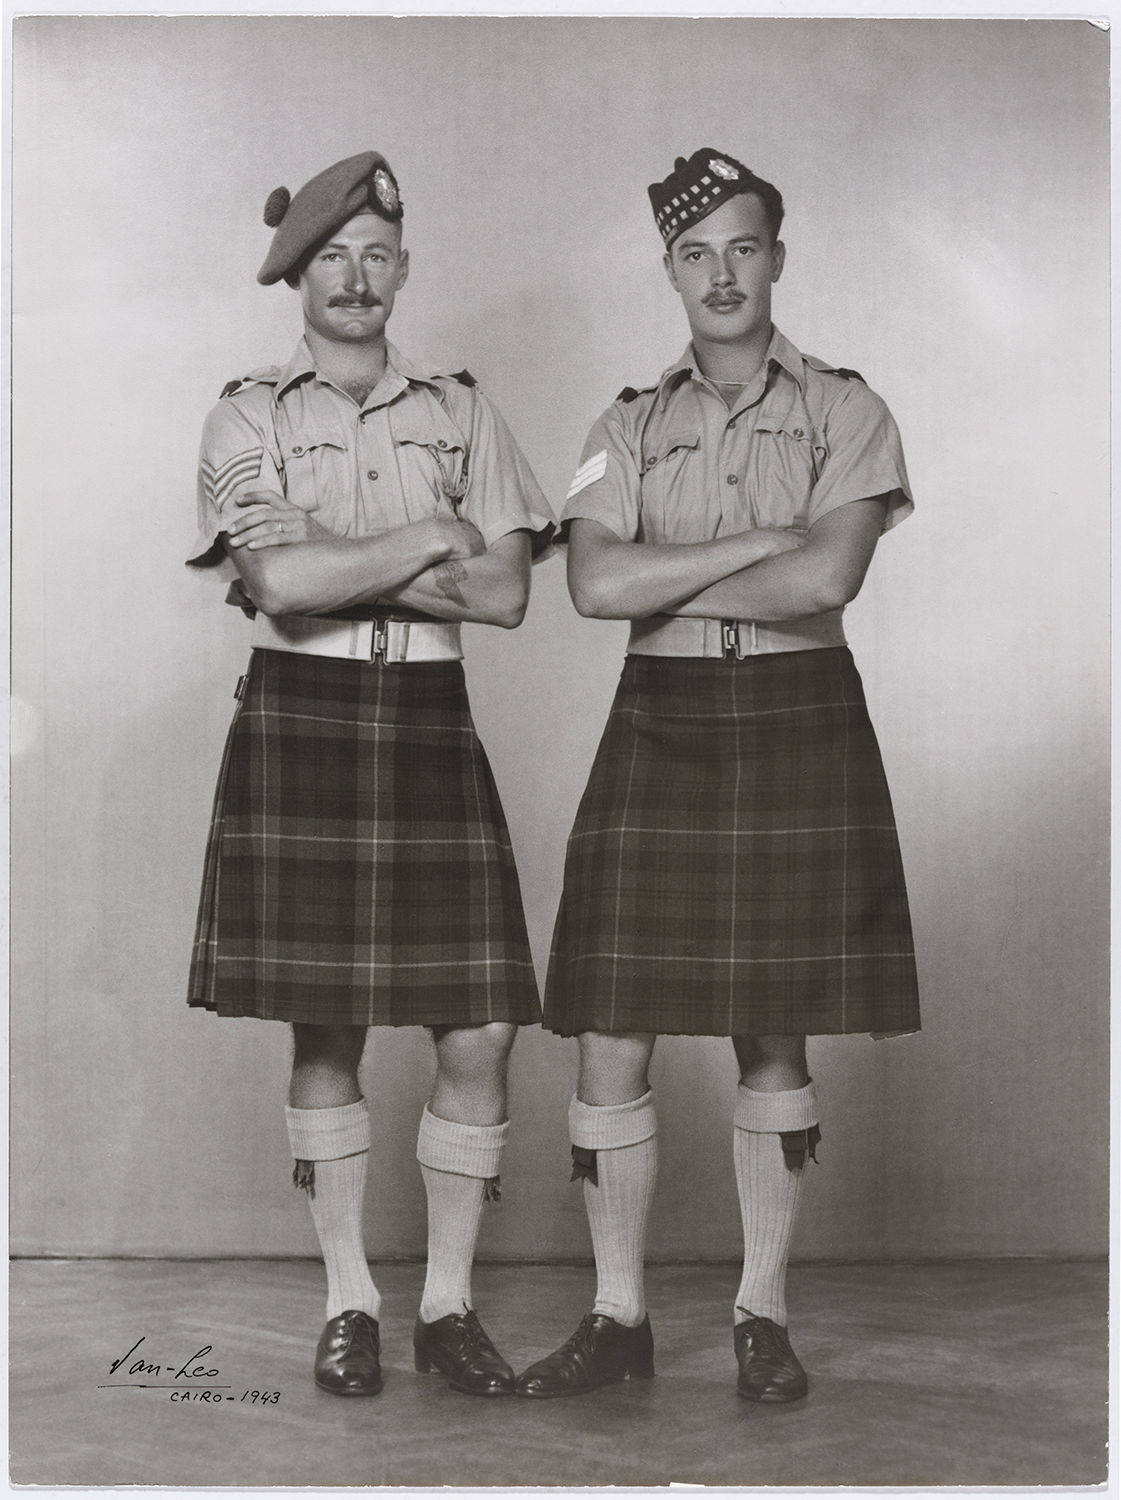 Van Leo, Scottish soldiers, World War II, 1943